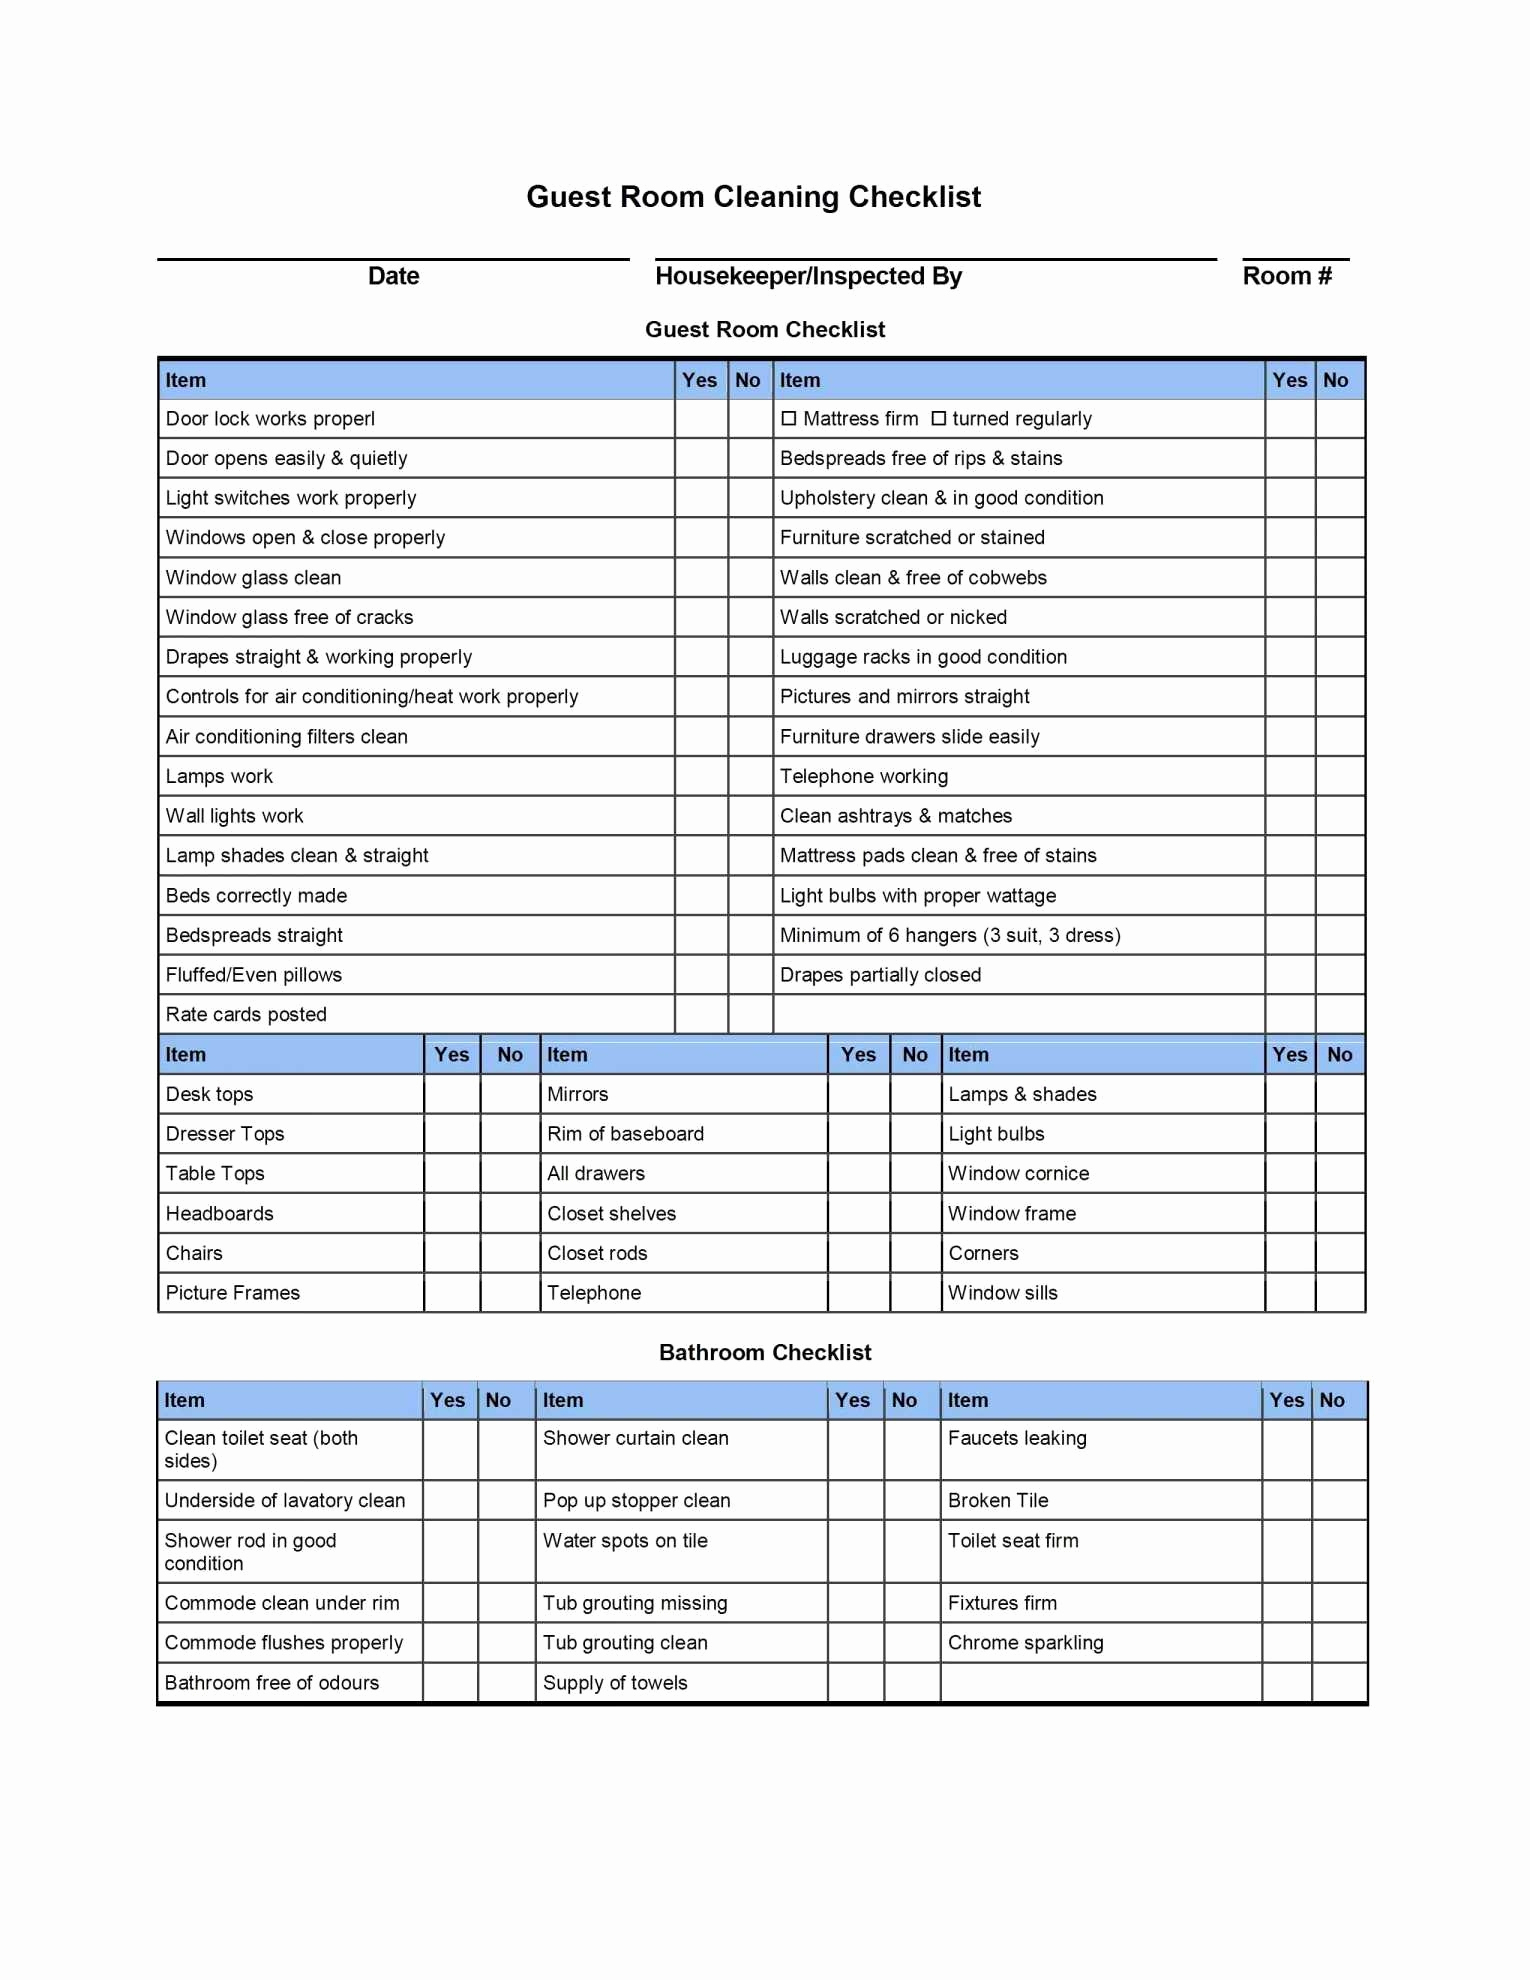 Liquor Inventory Spreadsheets New Inventory List Spreadsheet Bar And Inventory List Spreadsheet